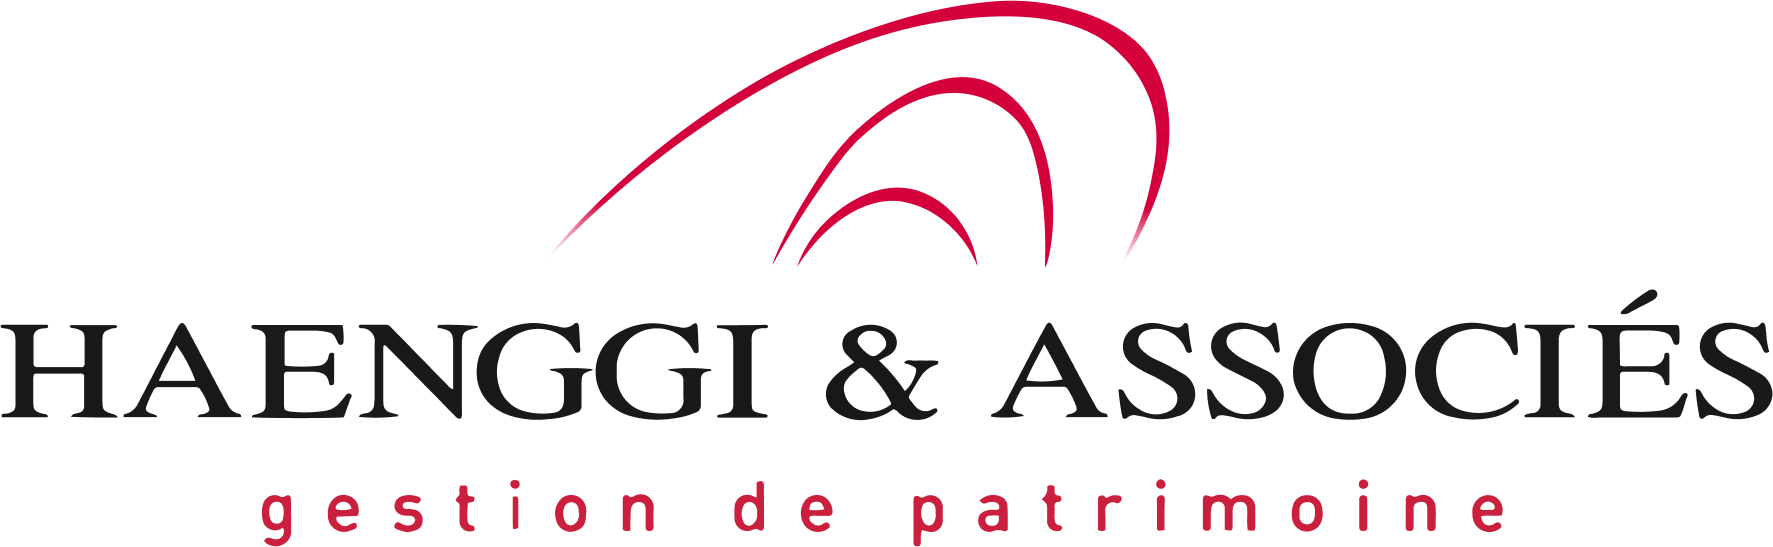 logo haenggi & associes